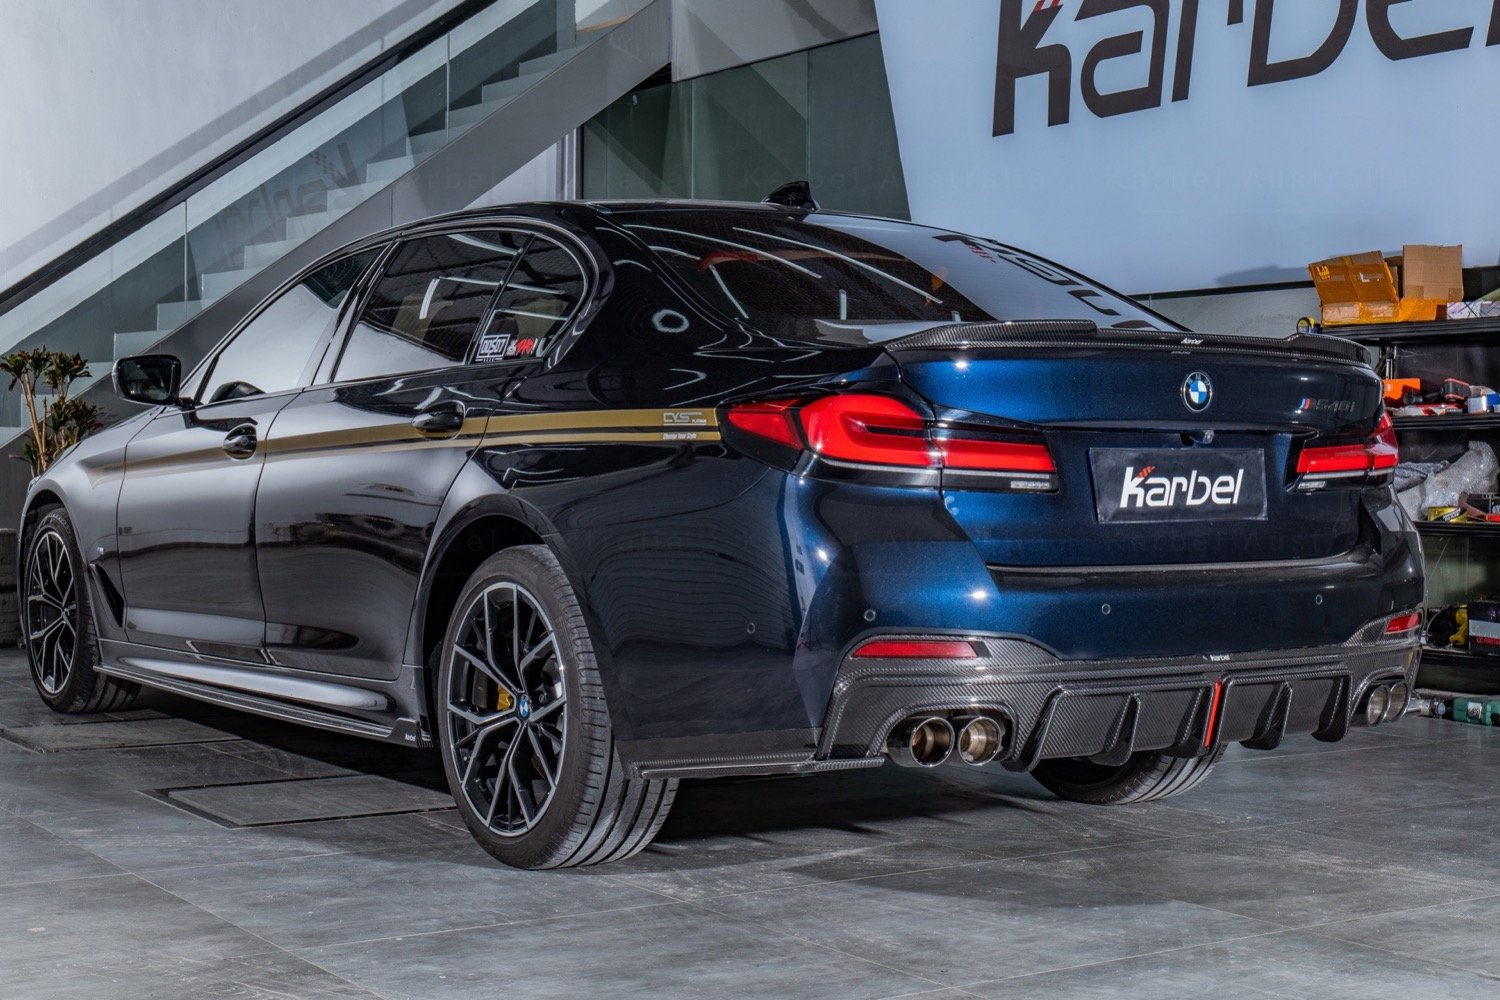 Check price and buy Karbel Carbon Fiber Body kit set for BMW 5 series G30 LCI